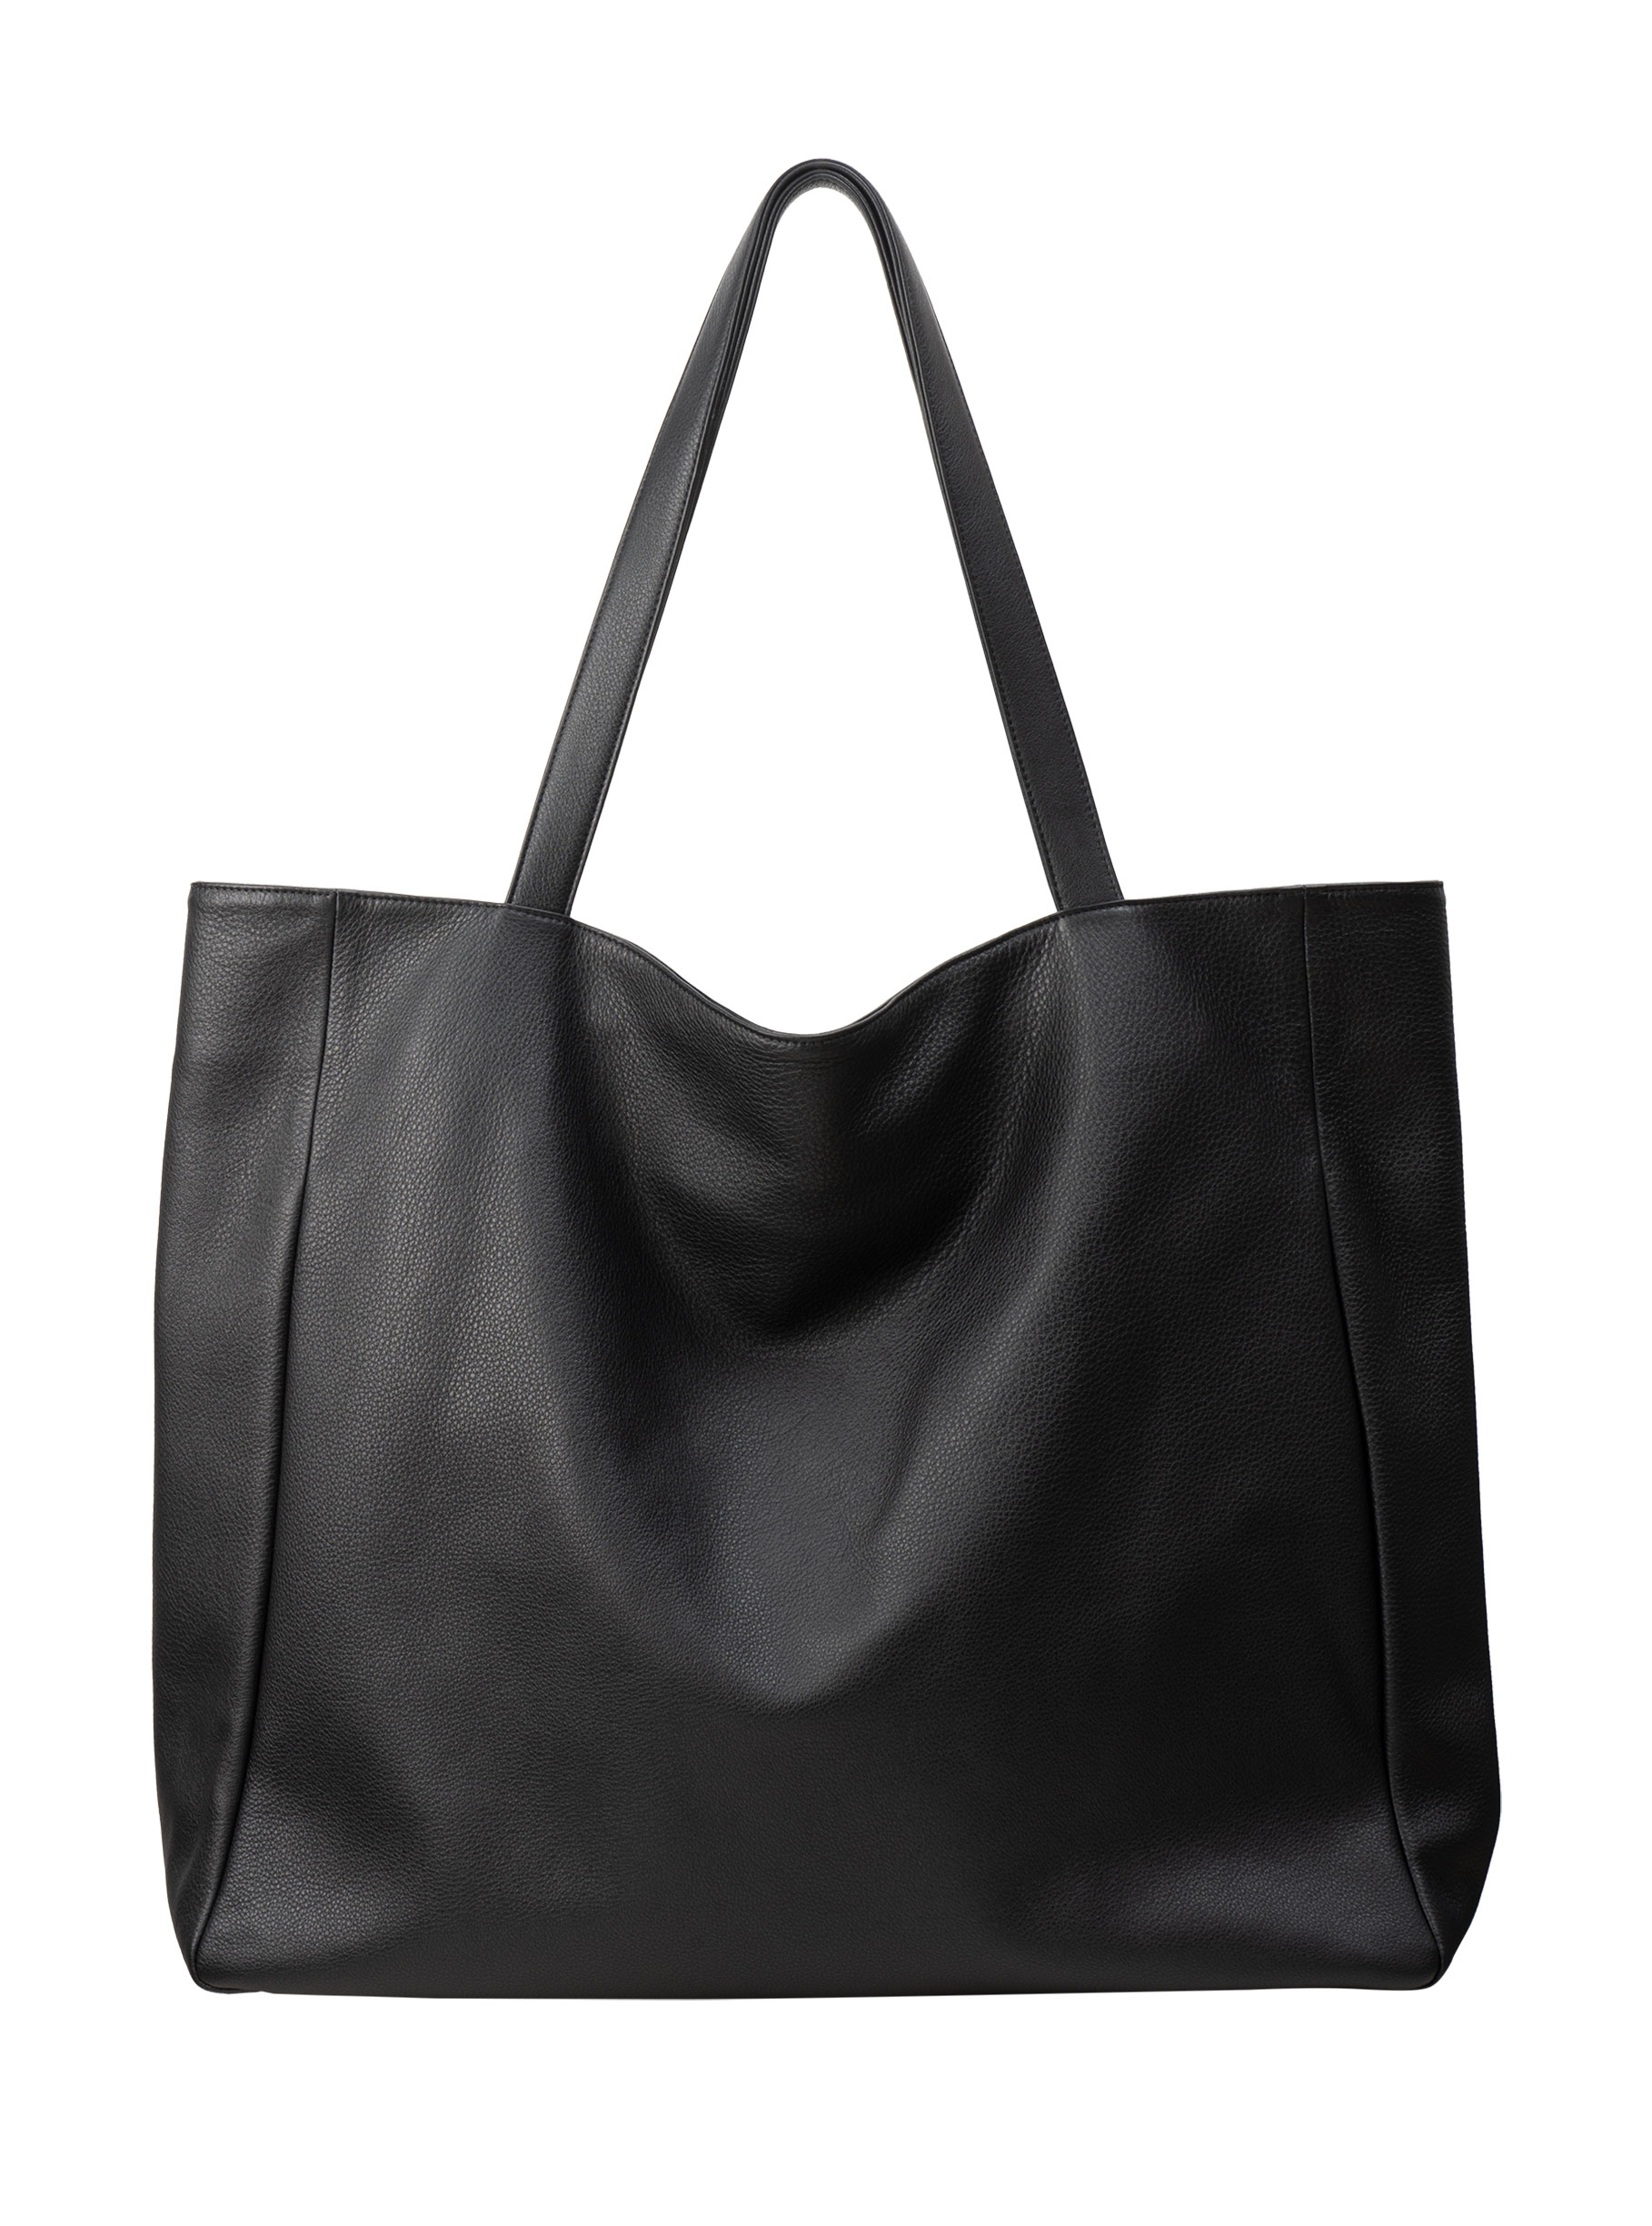 FABER ONE shoulder bag in black calfskin leather | TSATSAS